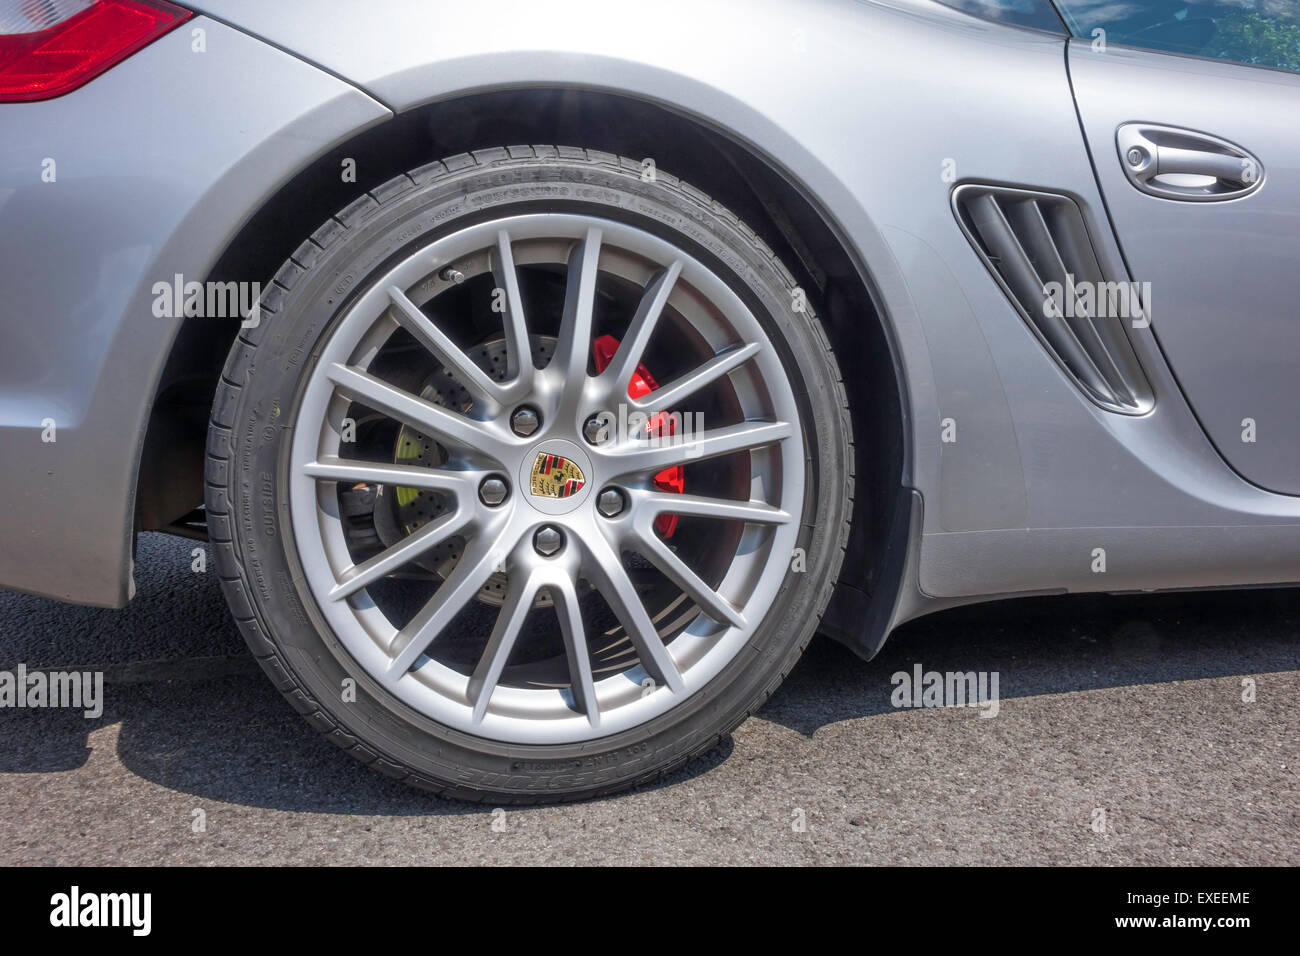 Rear wheel detail of a silver Porsche Cayman S sports car Stock Photo